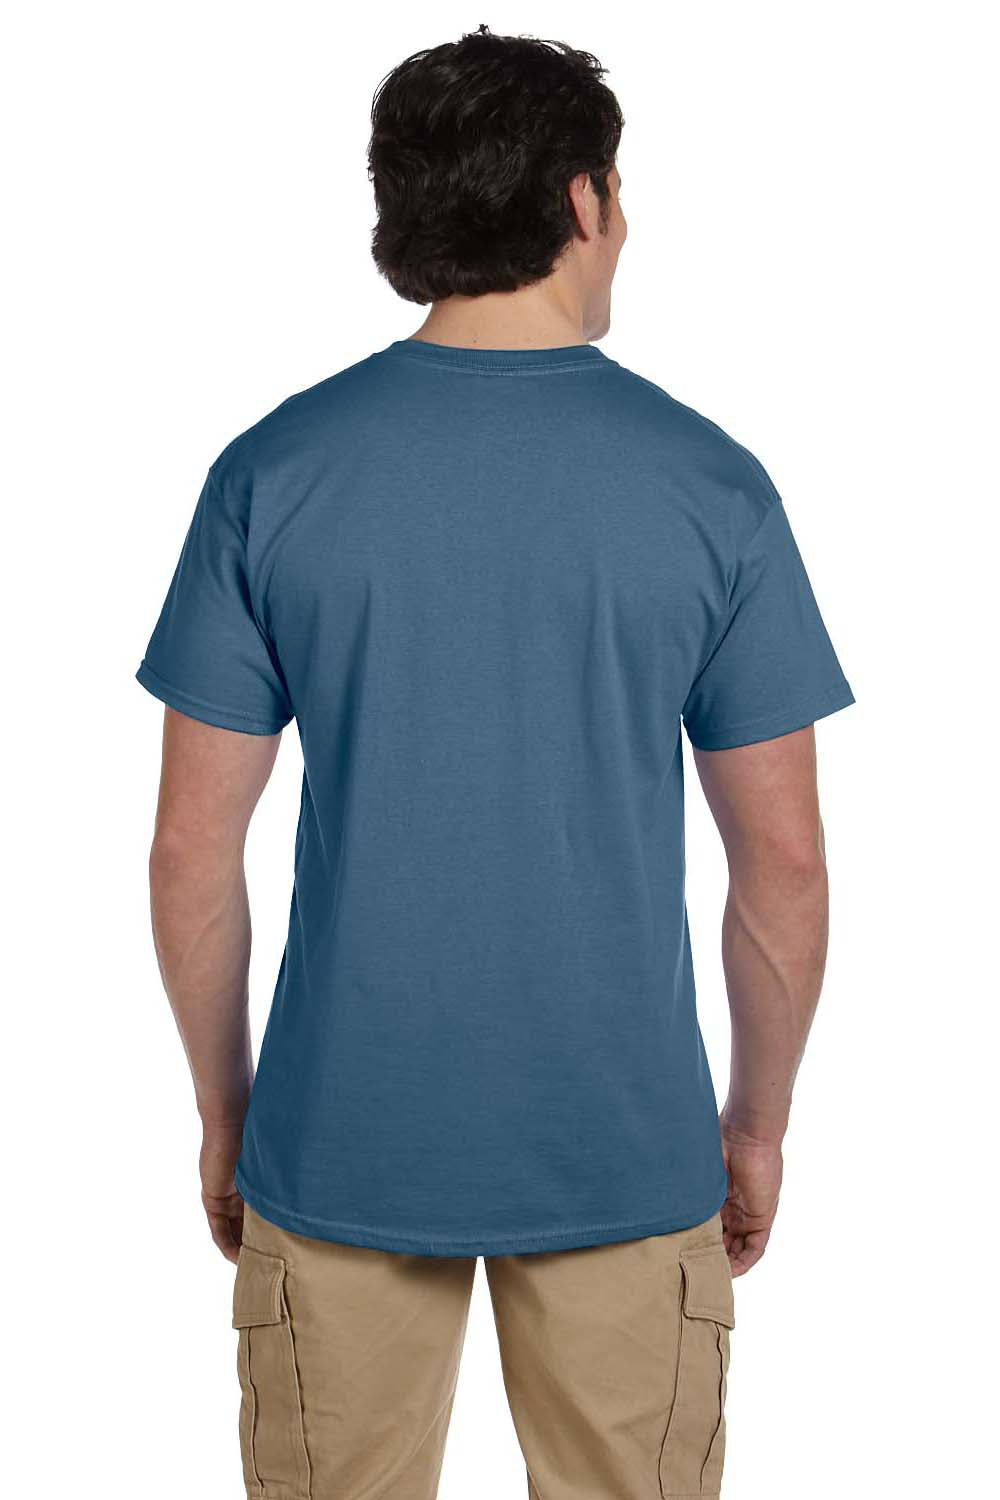 Hanes 5170 Mens EcoSmart Short Sleeve Crewneck T-Shirt Denim Blue Back